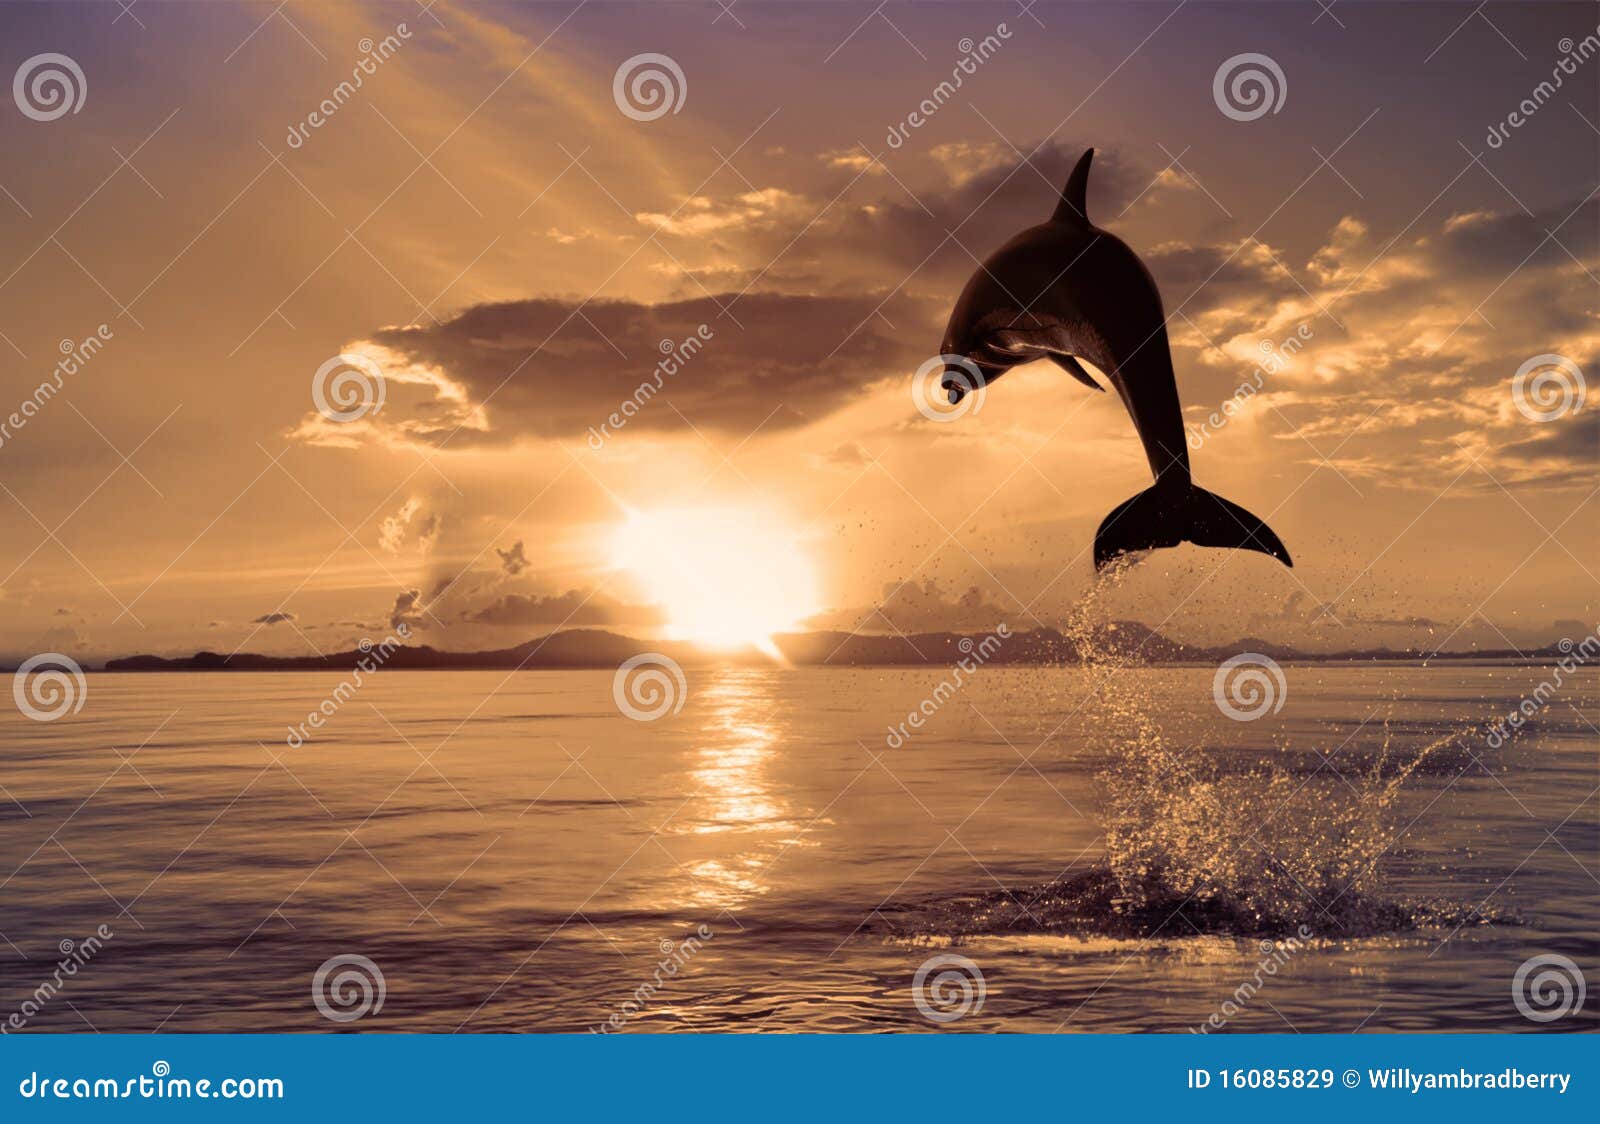 beautiful dolphin jumping from shining water